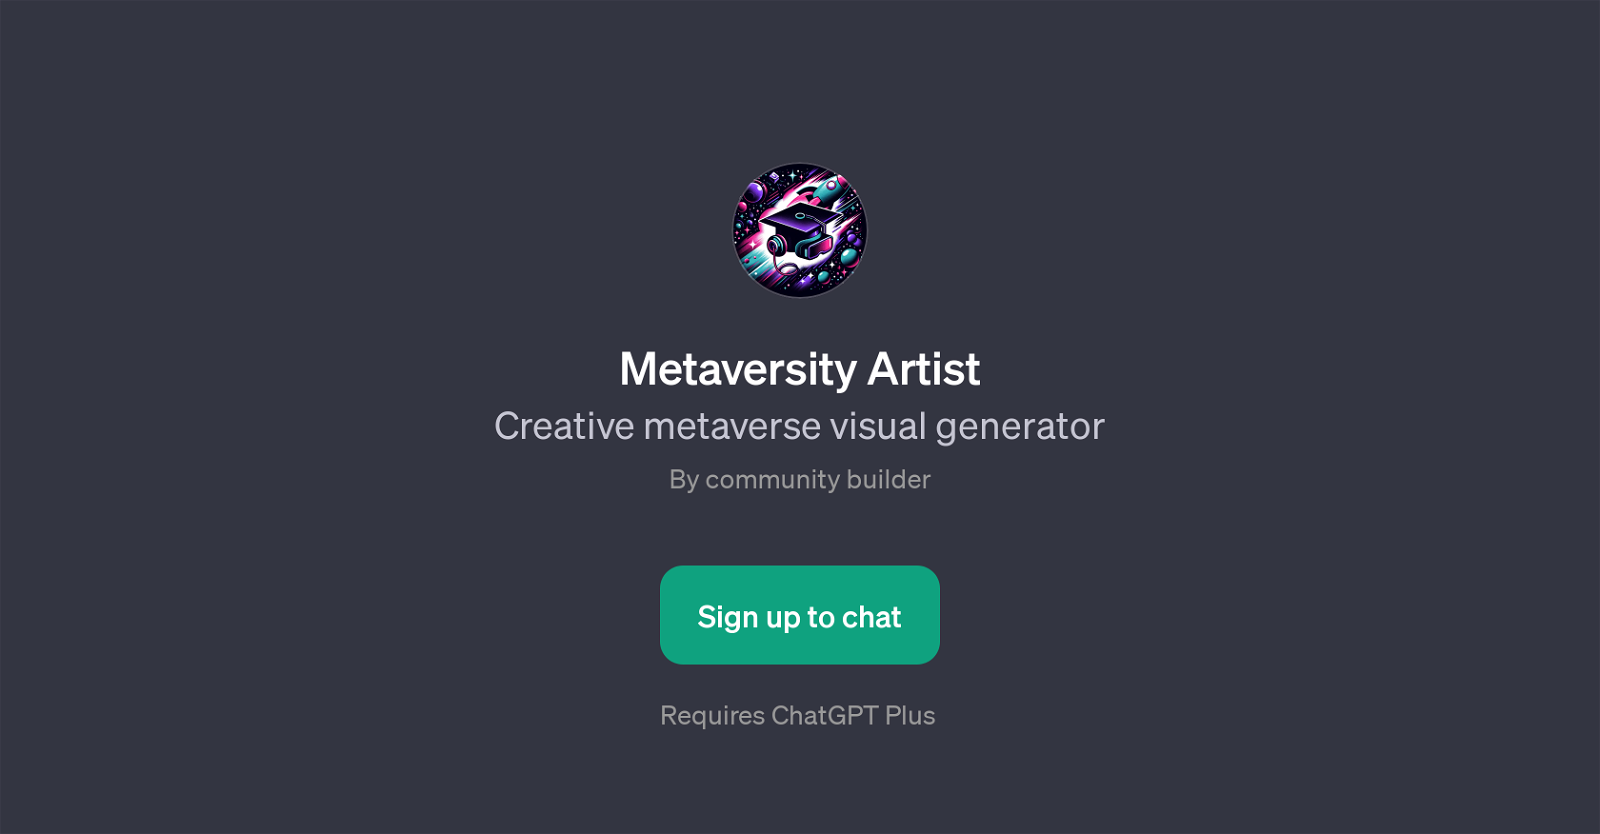 Metaversity Artist website